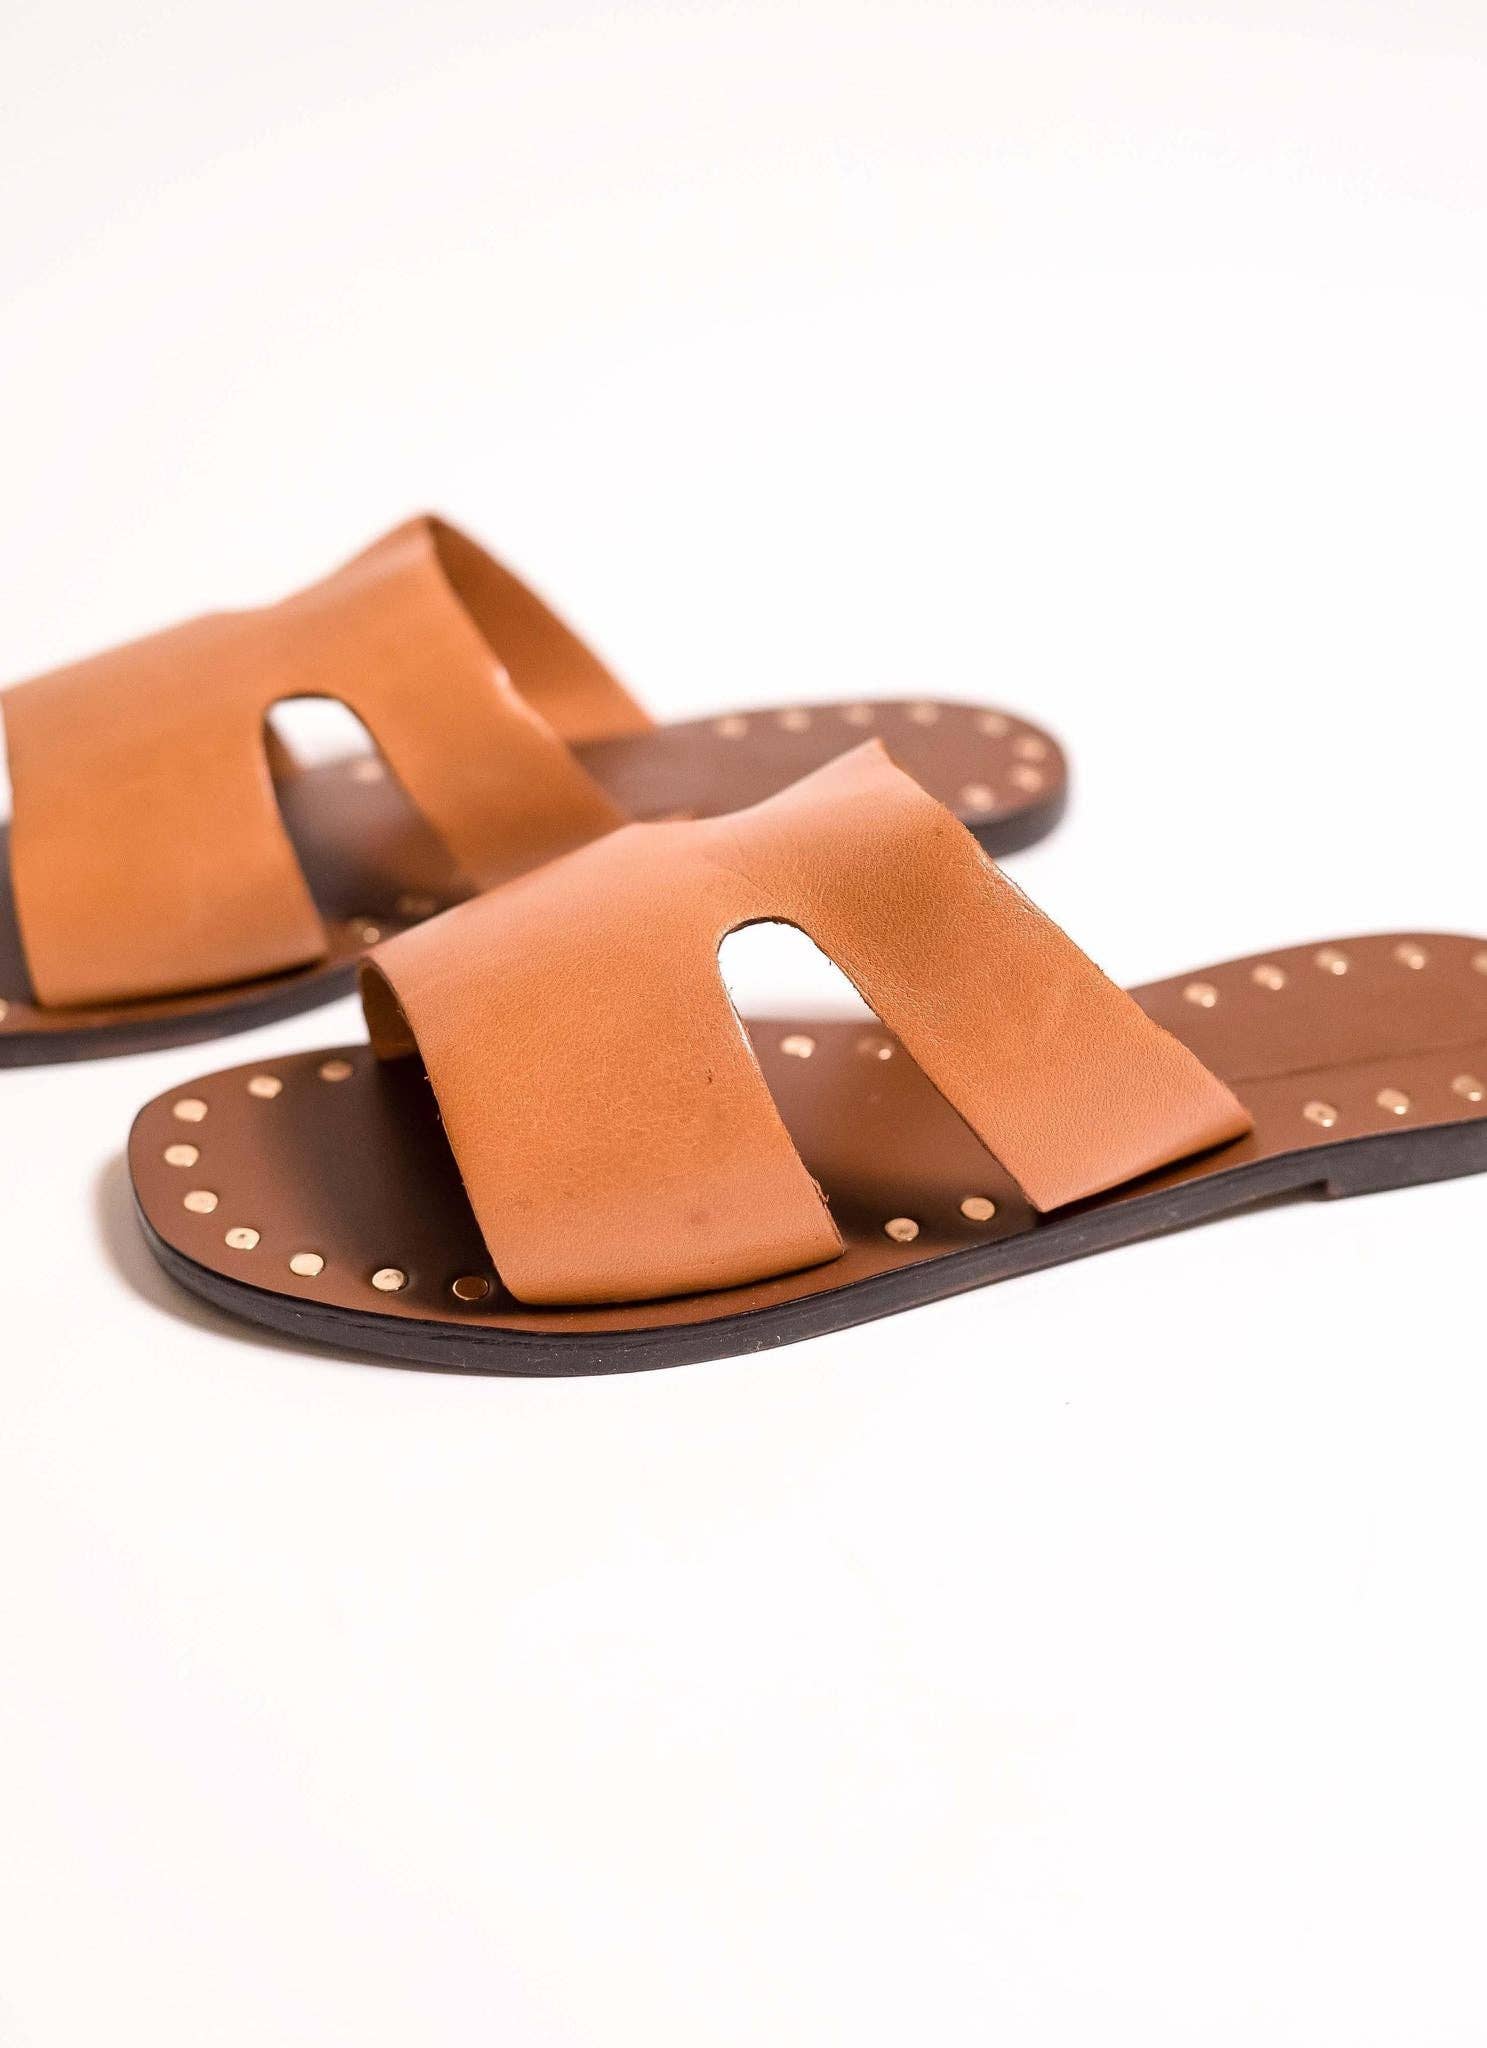 SALT + UMBER - LALA - BROWN upcycled leather sandal  studded square toe